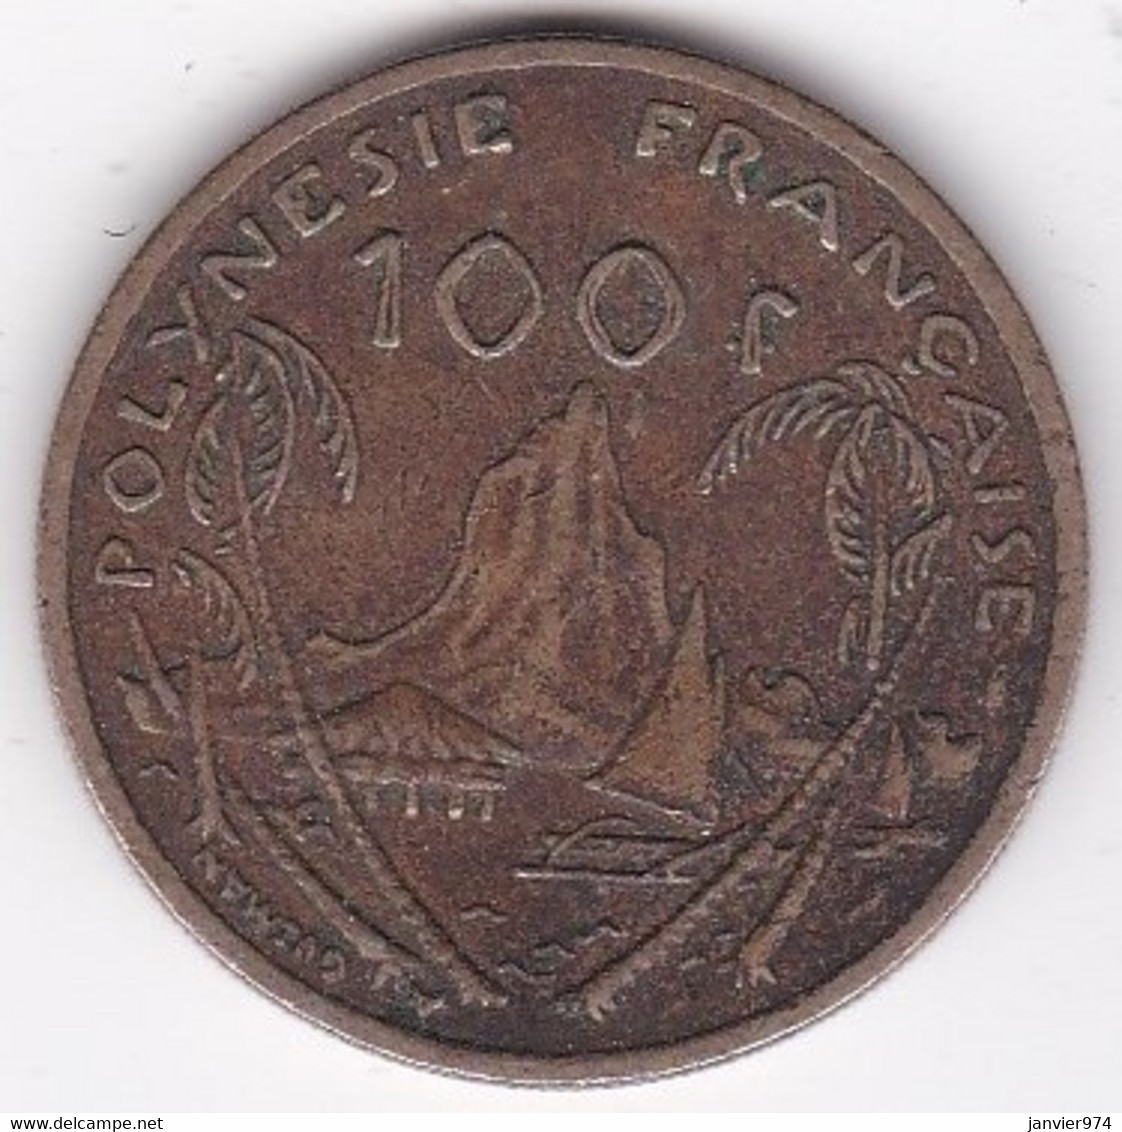 Polynésie Française . 100 Francs 1986, Cupro-nickel-aluminium - Französisch-Polynesien